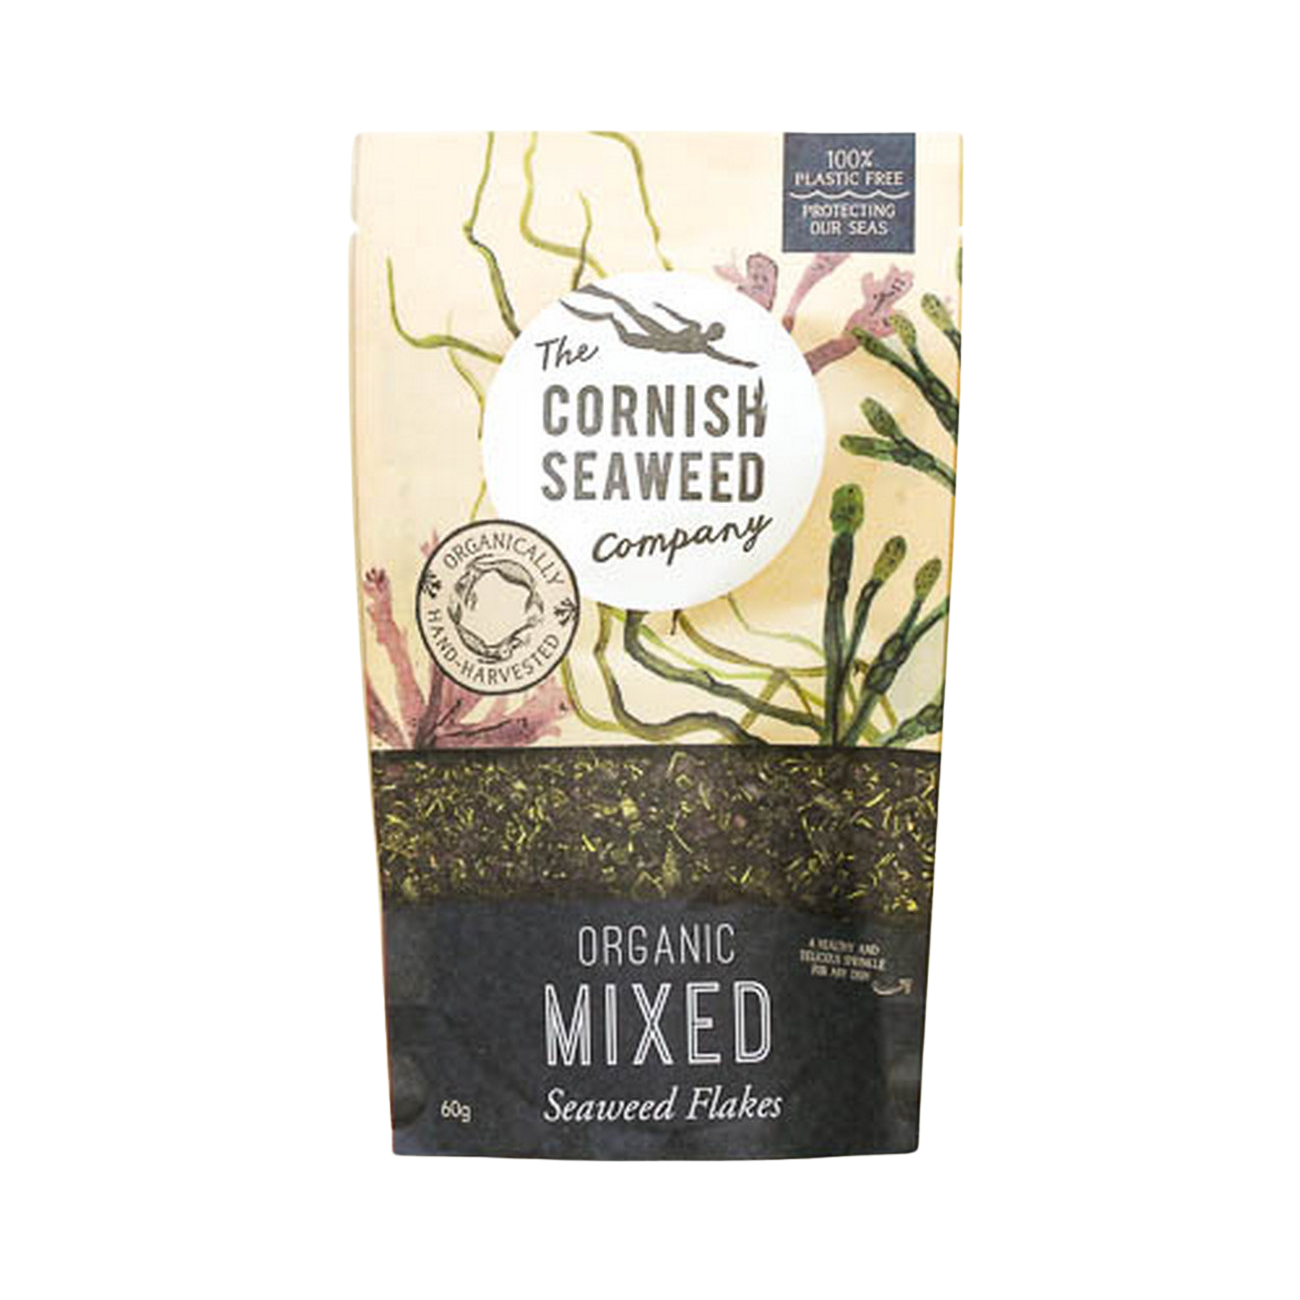 Mix of Organic Seaweed Flakes 60g